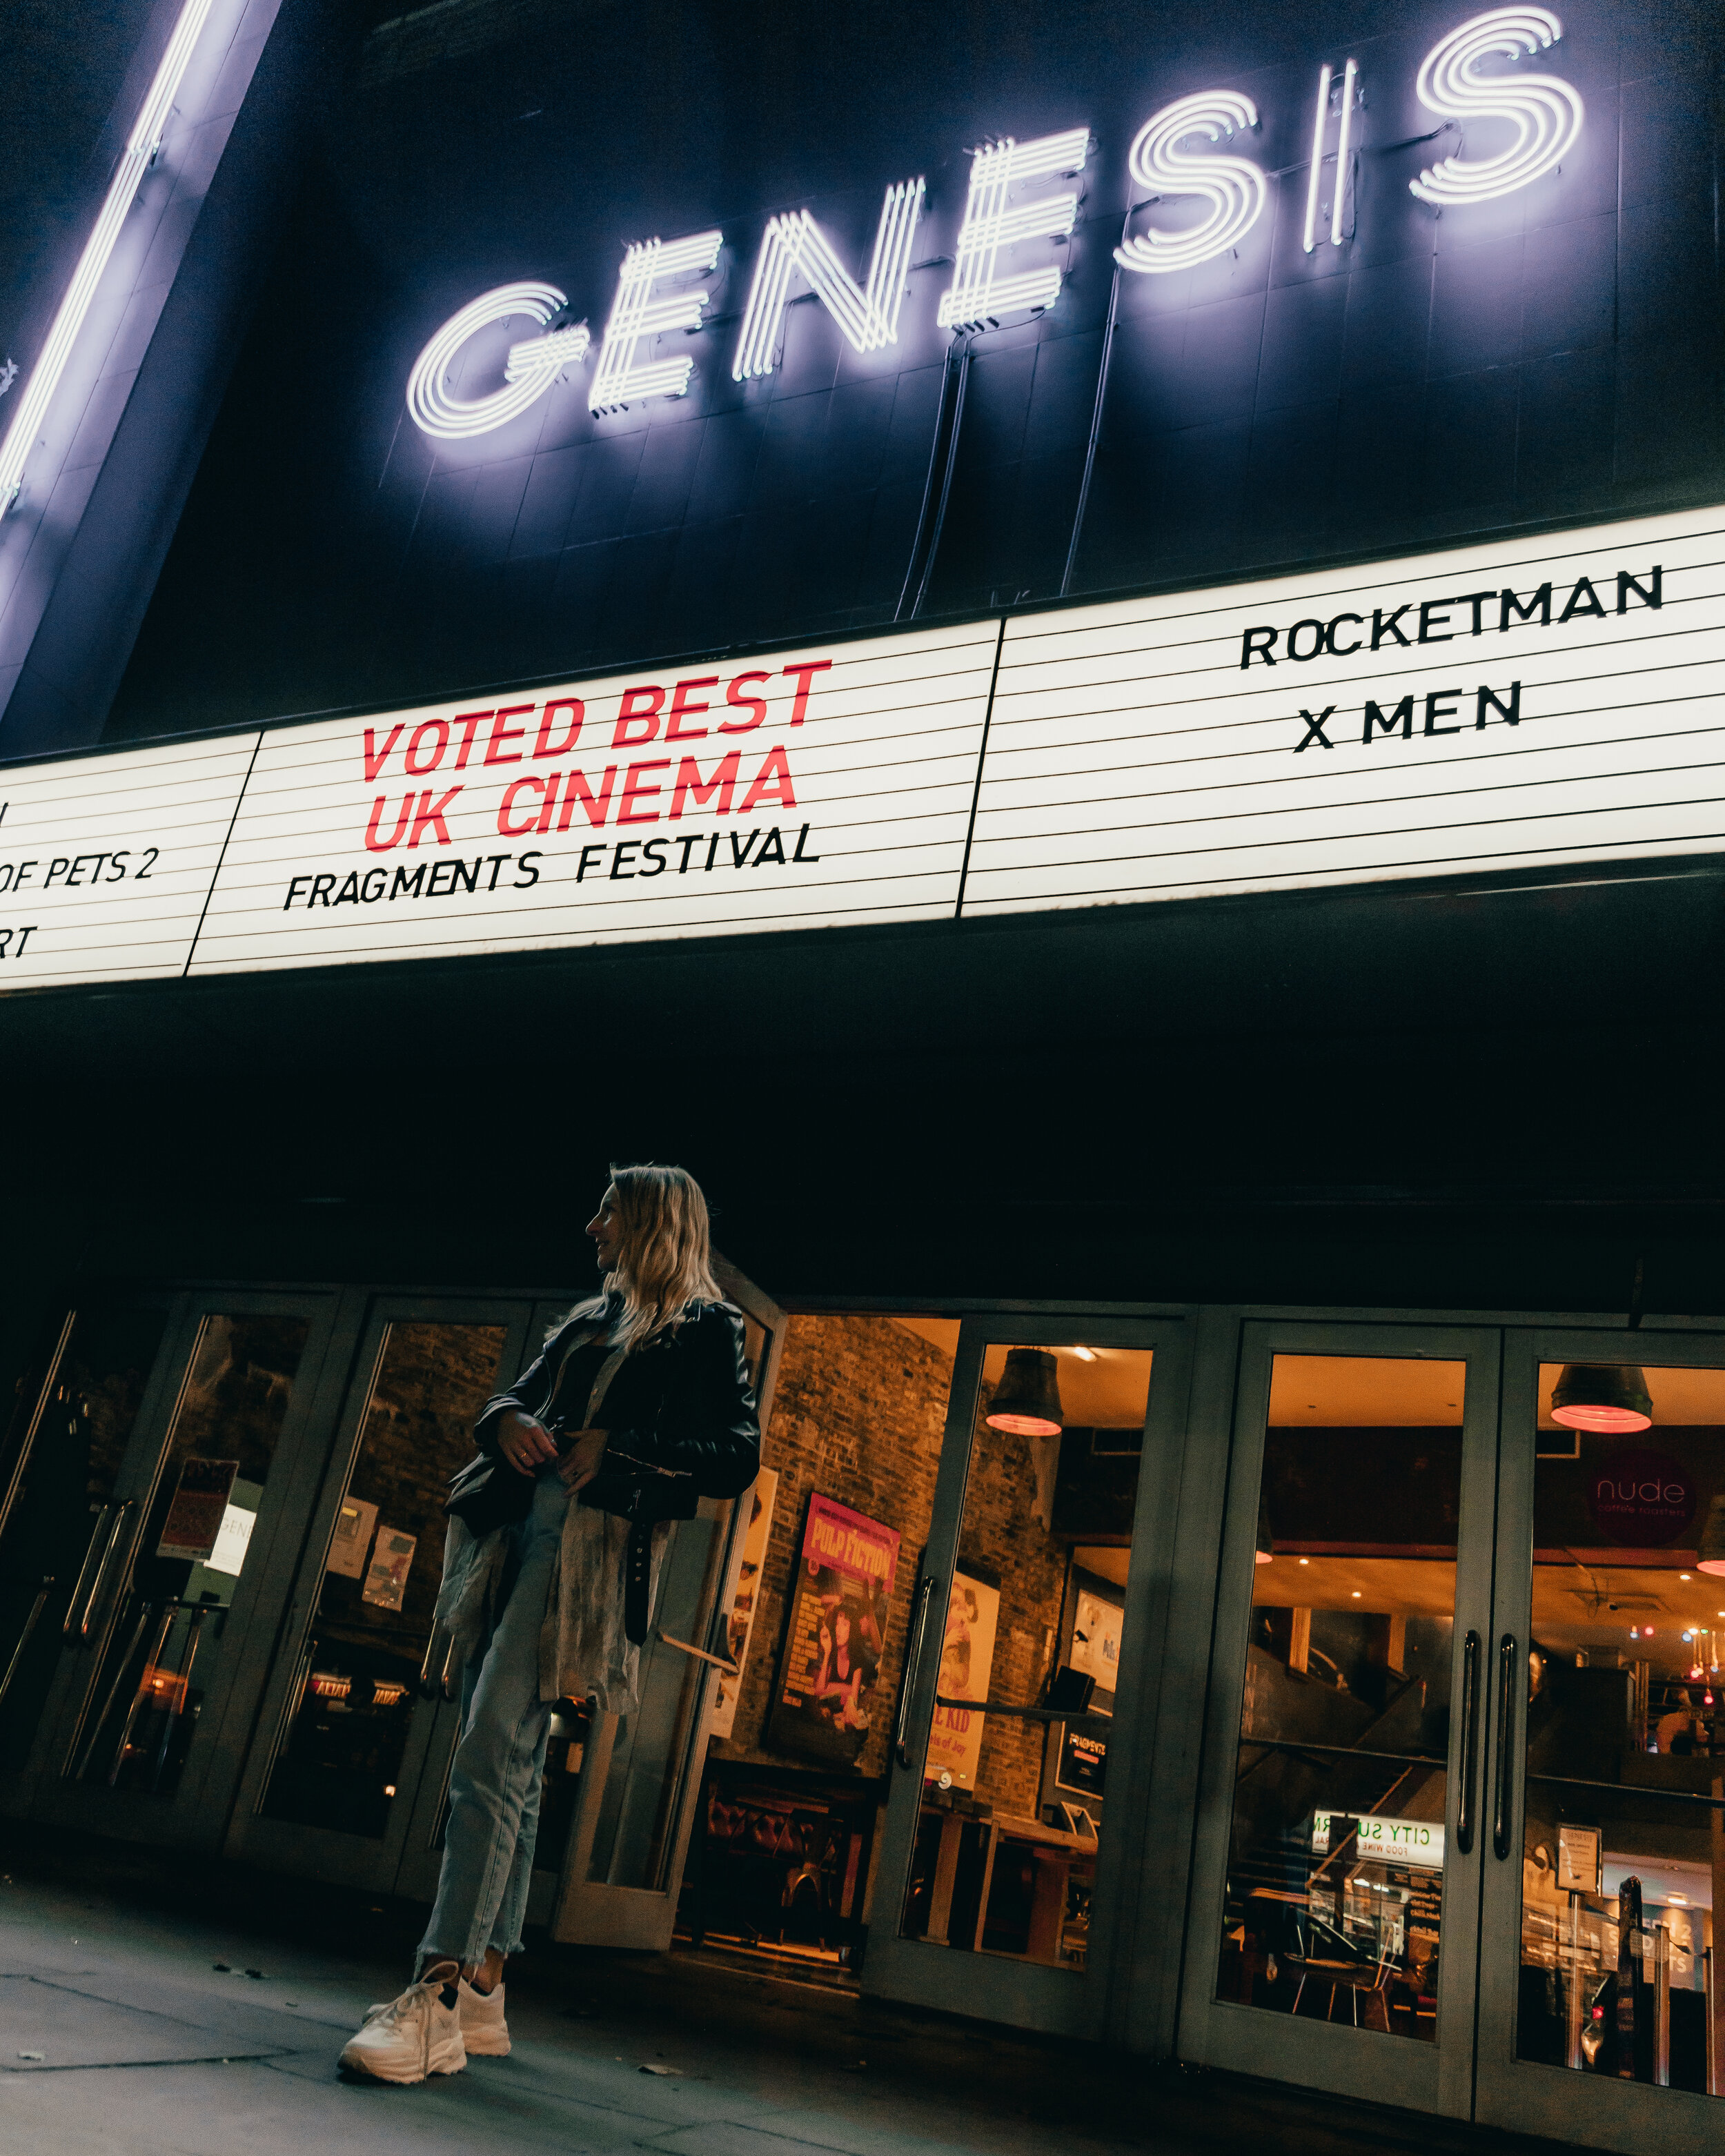 Genesis Cinema in Whitechapel